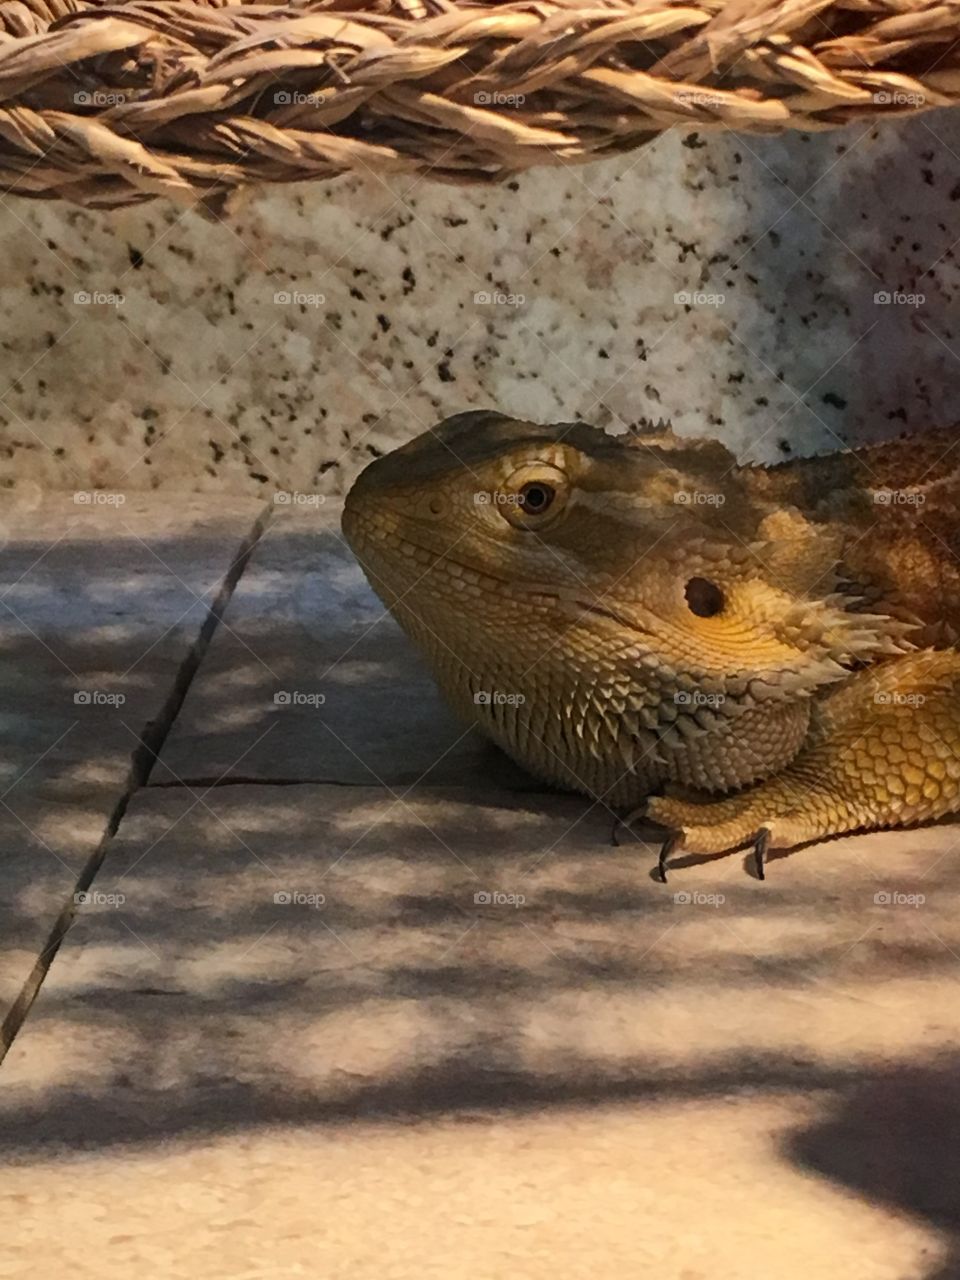  Pet reptile male bearded dragon